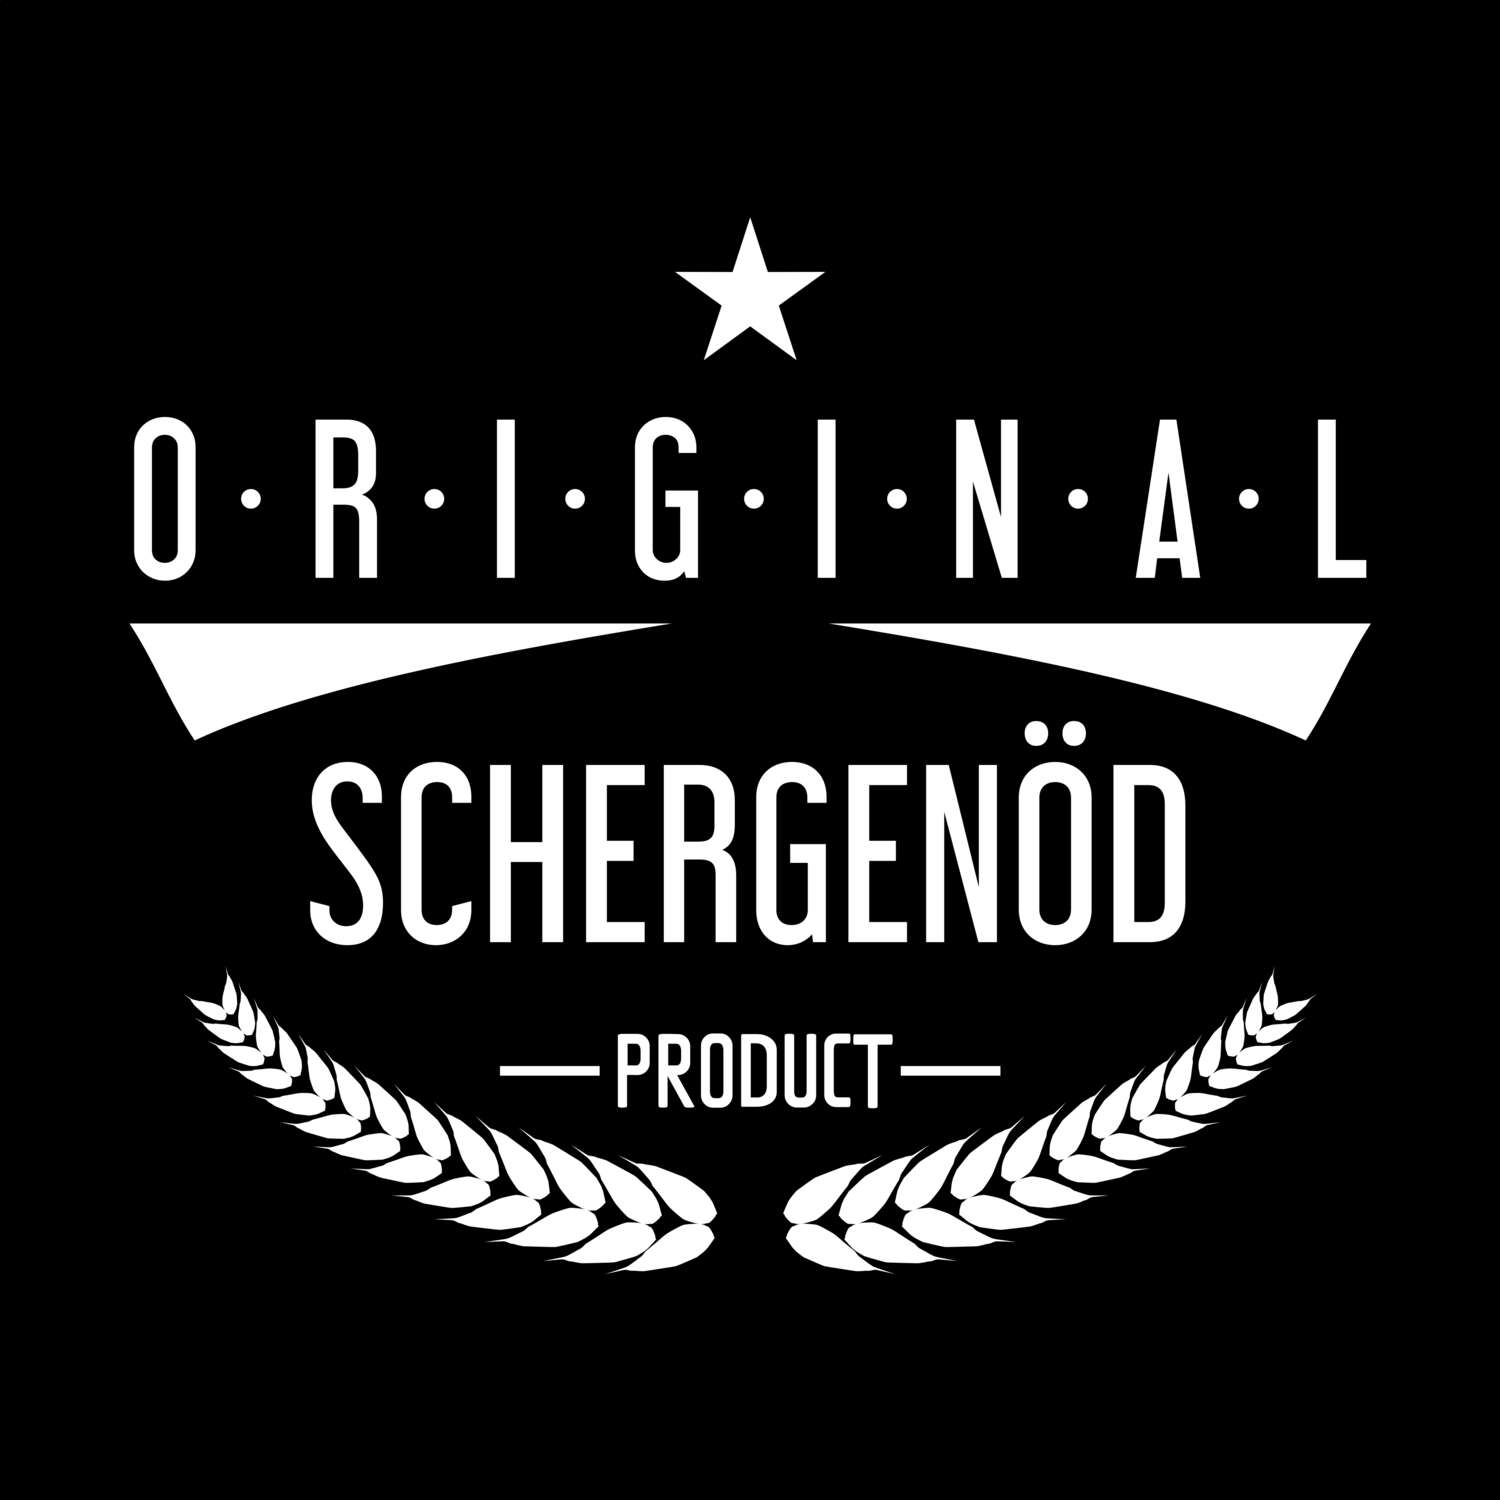 Schergenöd T-Shirt »Original Product«